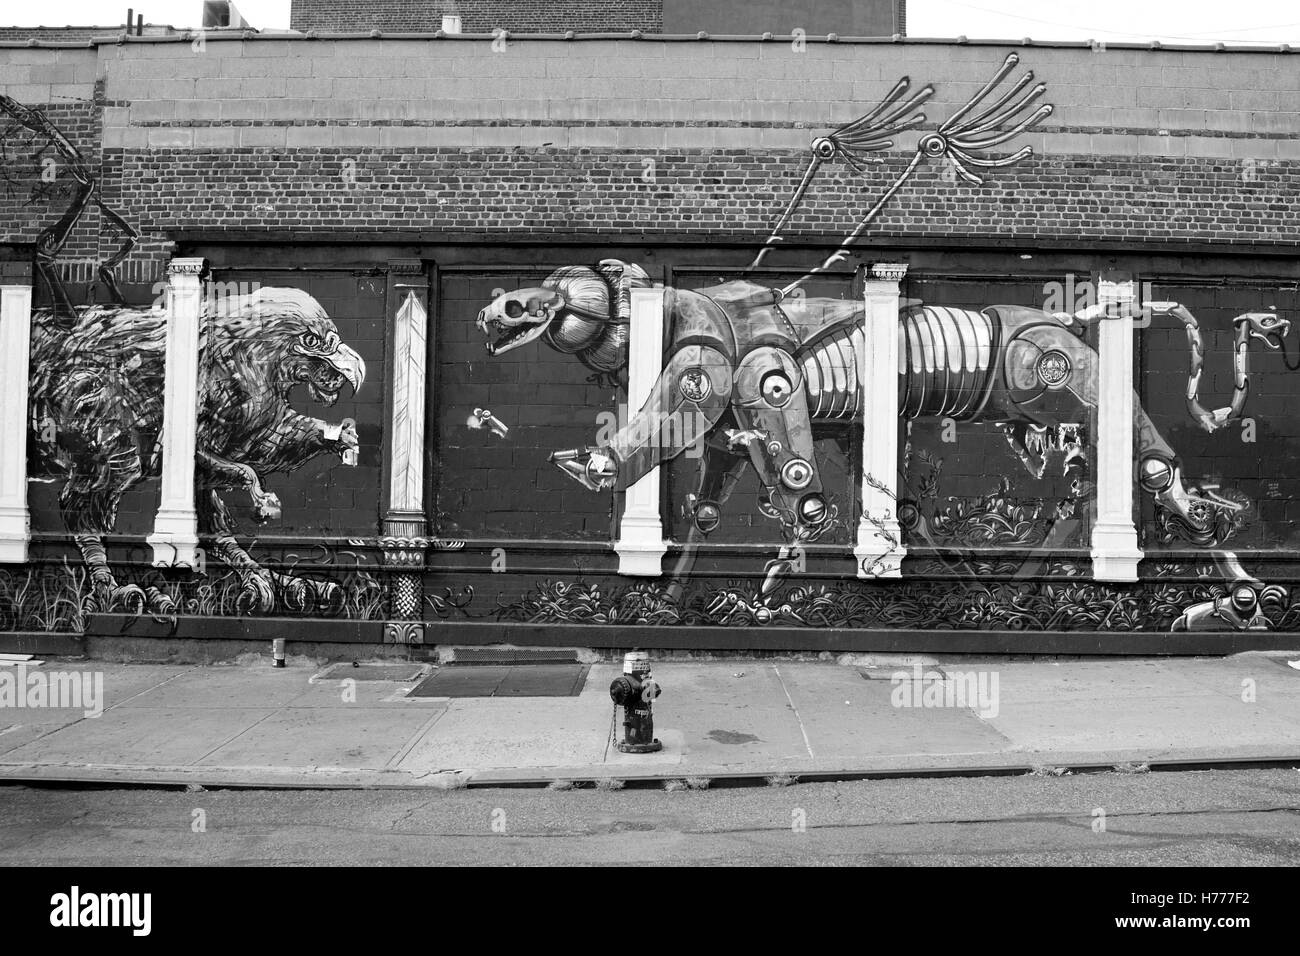 Muro di graffiti murali di arte di strada lungo Meserole St in Oriente Williamsburg / Brunswick sezione di Brooklyn, New York City, Stati Uniti d'America Foto Stock